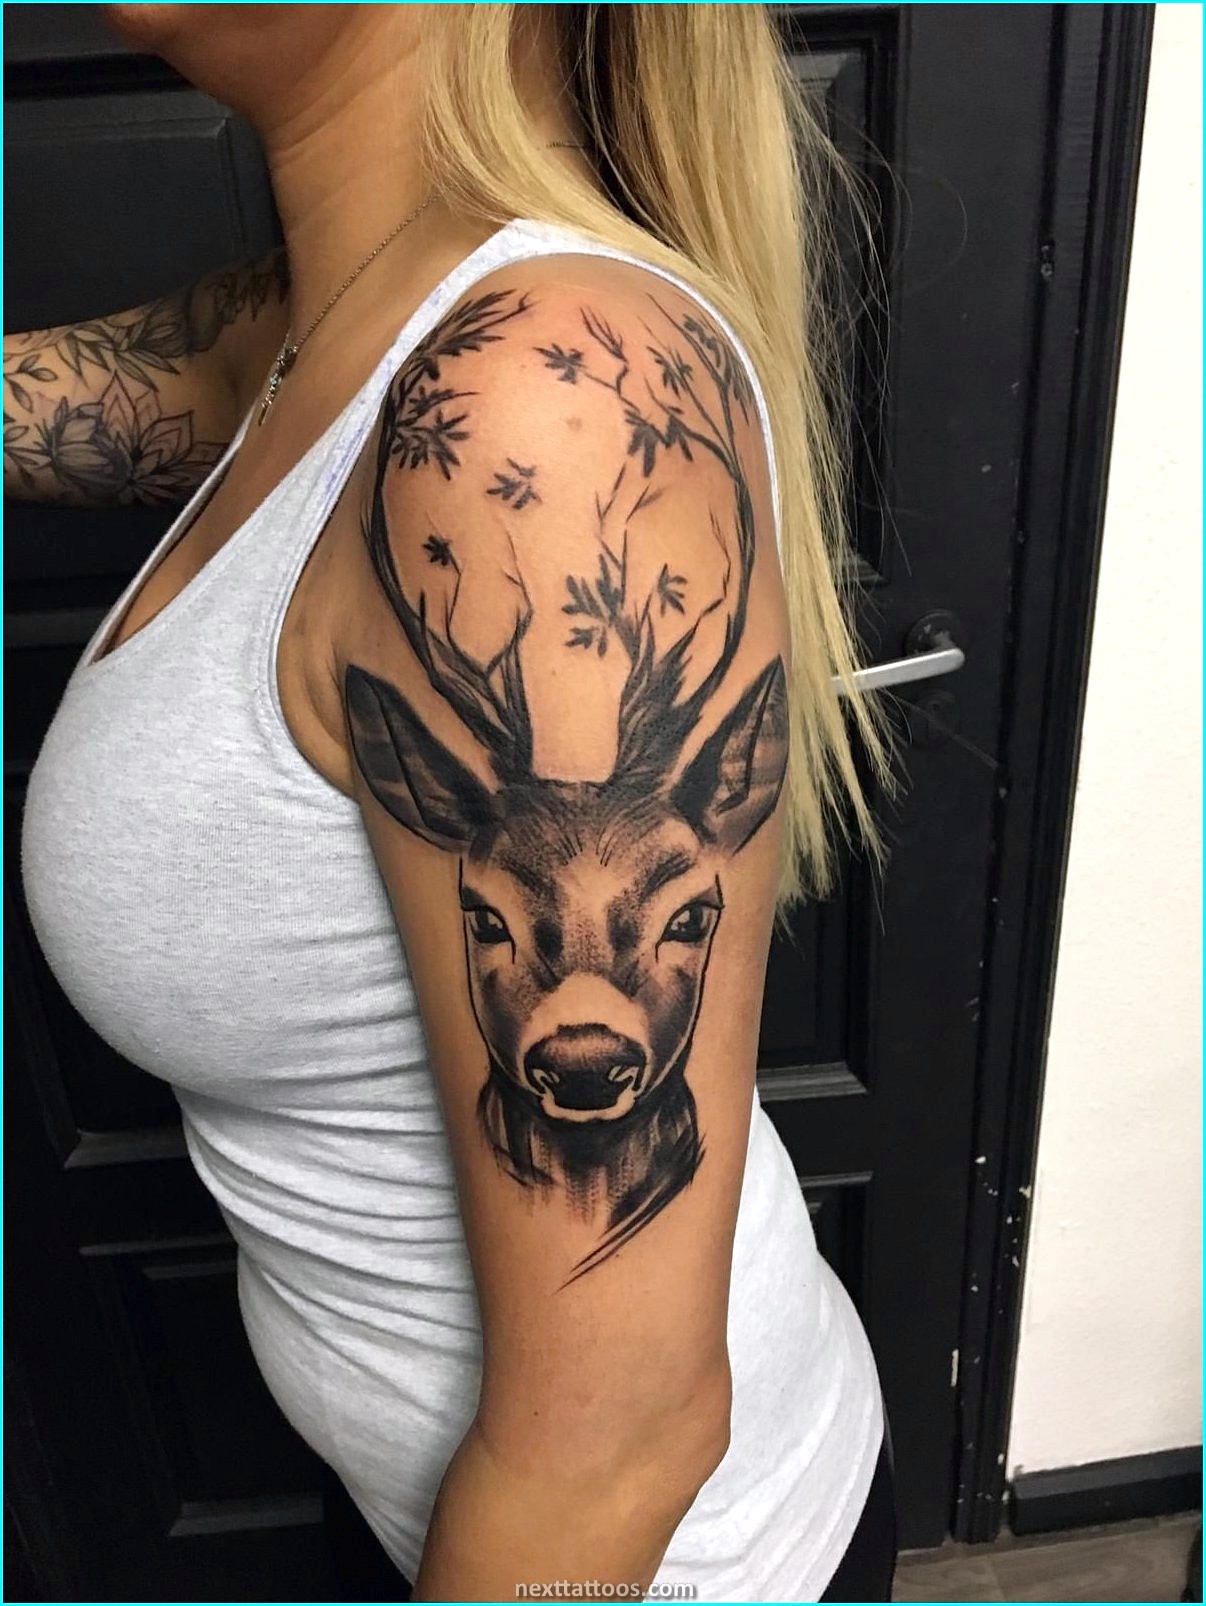 Animal Tattoos For Women